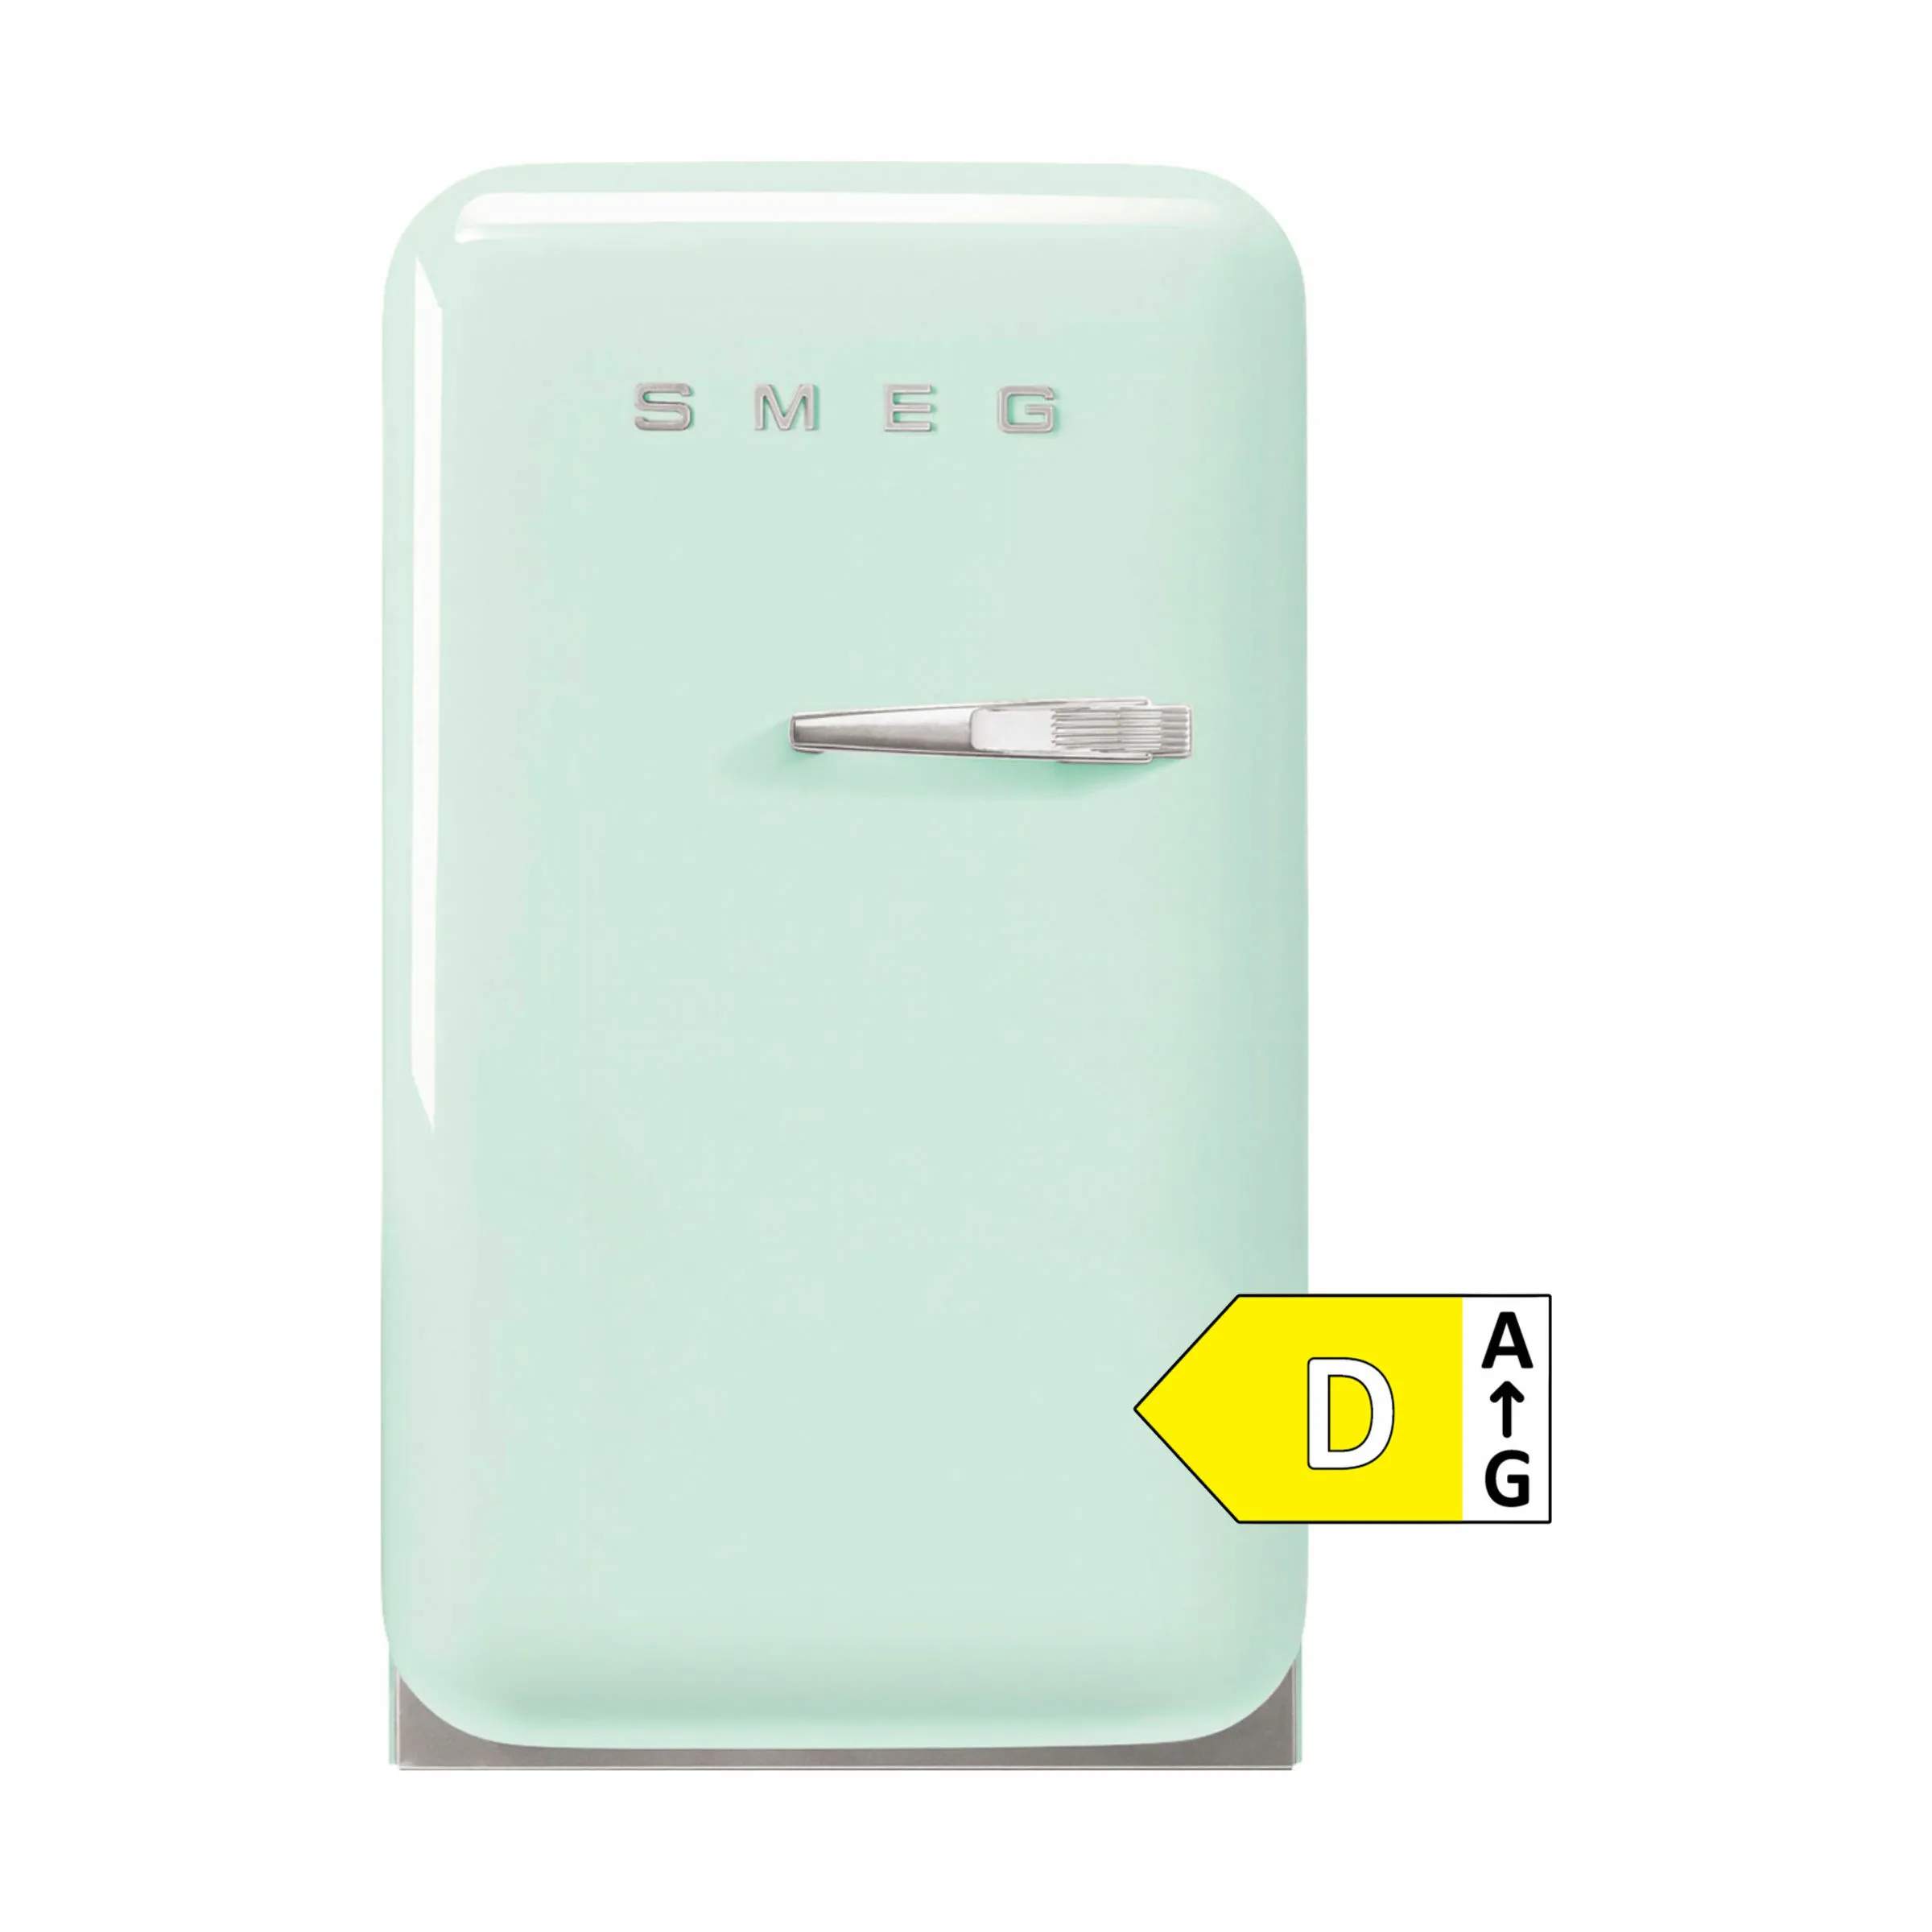 50's Style Minikøleskab, pastelgrøn, large